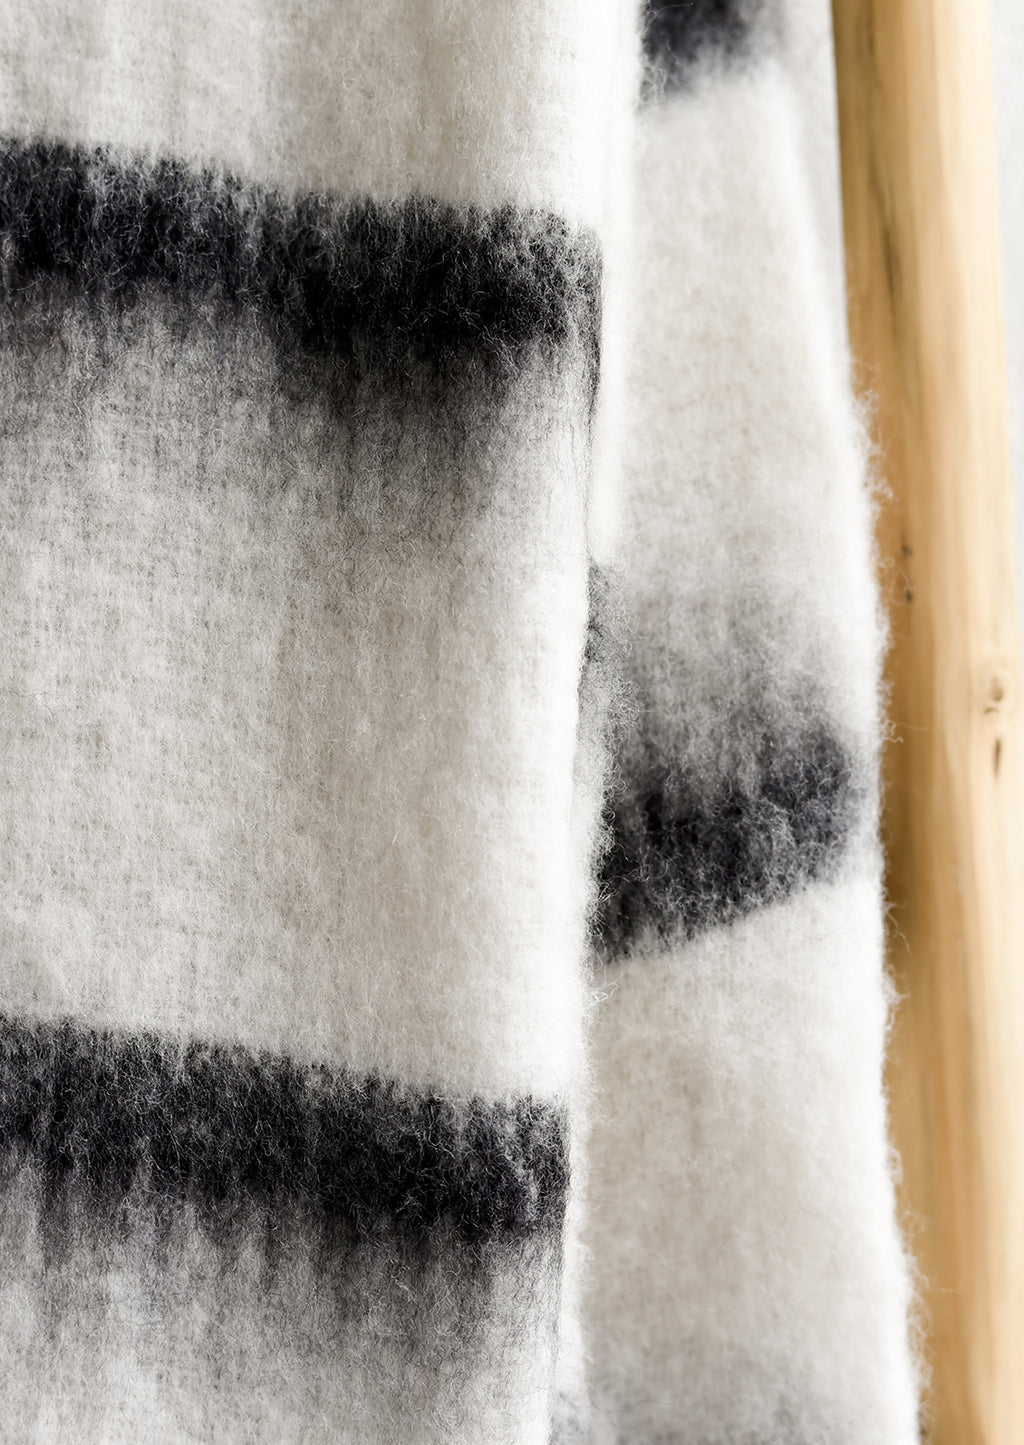 2: A fuzzy throw blanket in white with black stripes.